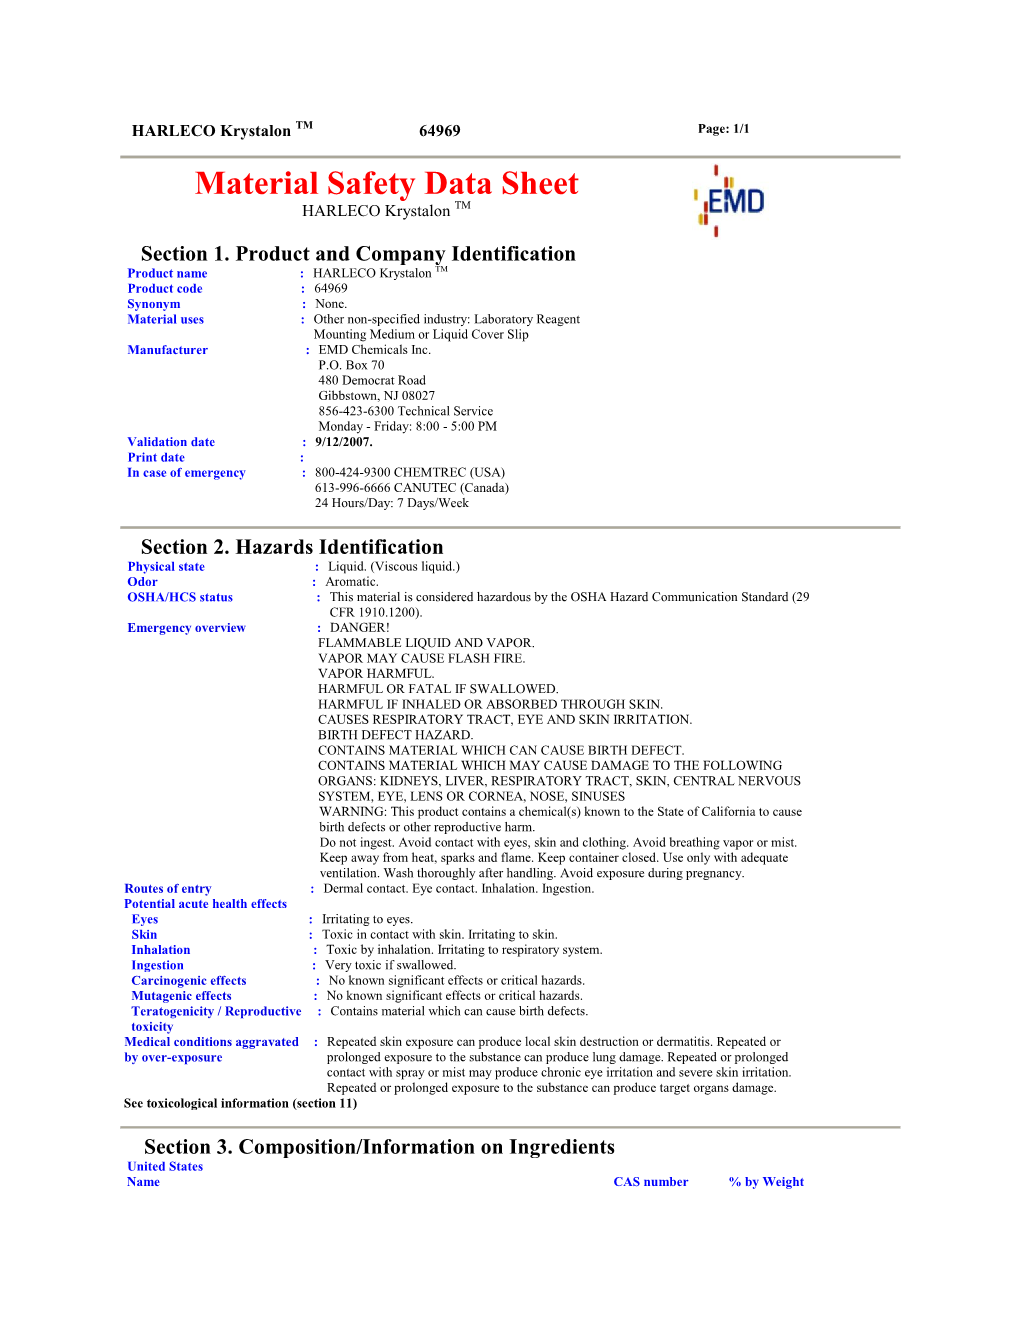 Material Safety Data Sheet HARLECO Krystalon TM